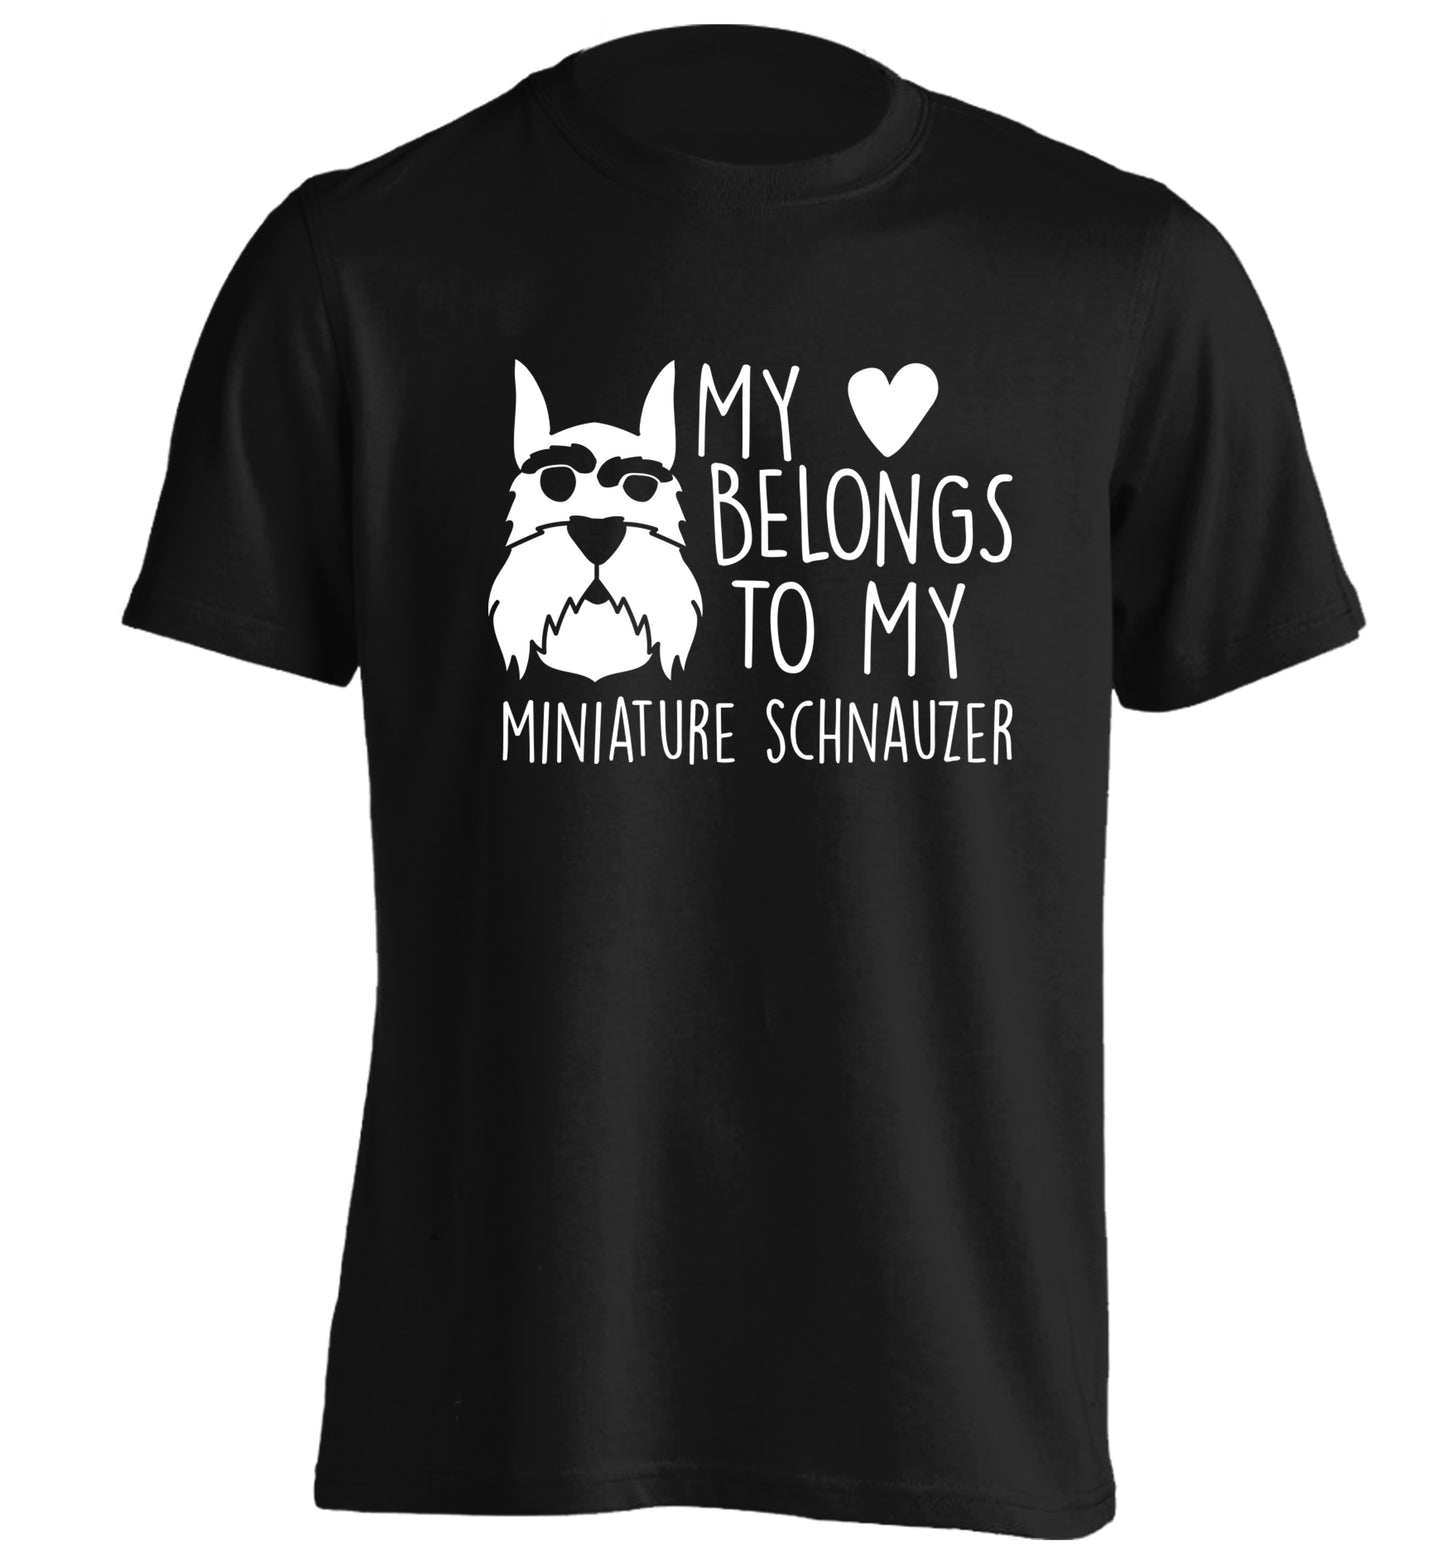 My heart belongs to my miniature schnauzer adults unisex black Tshirt 2XL